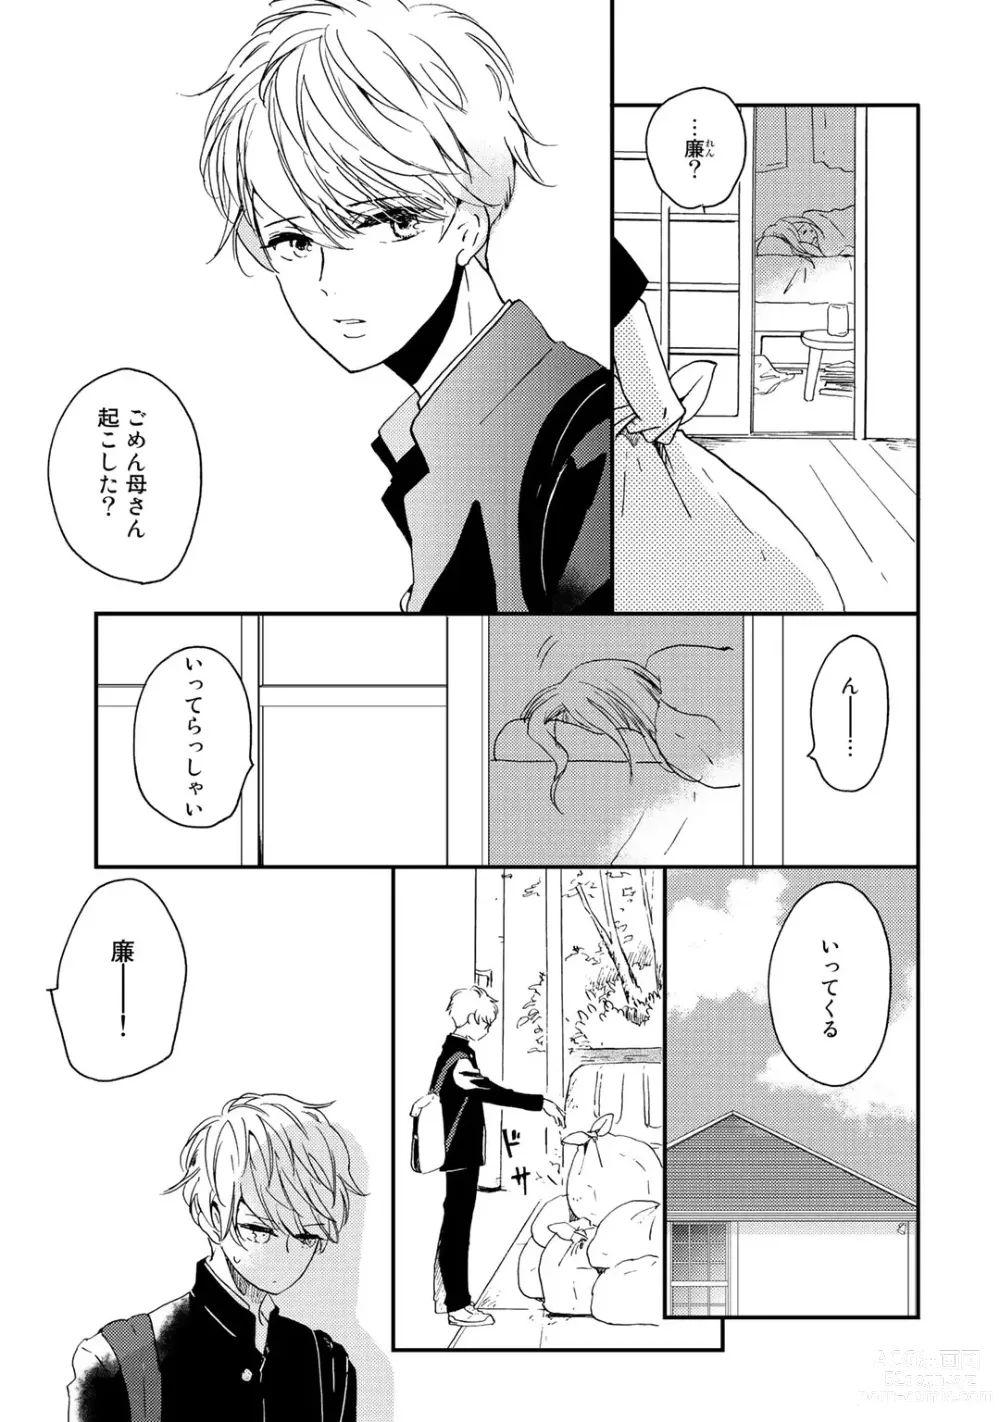 Page 9 of manga Hatsukoi Escape